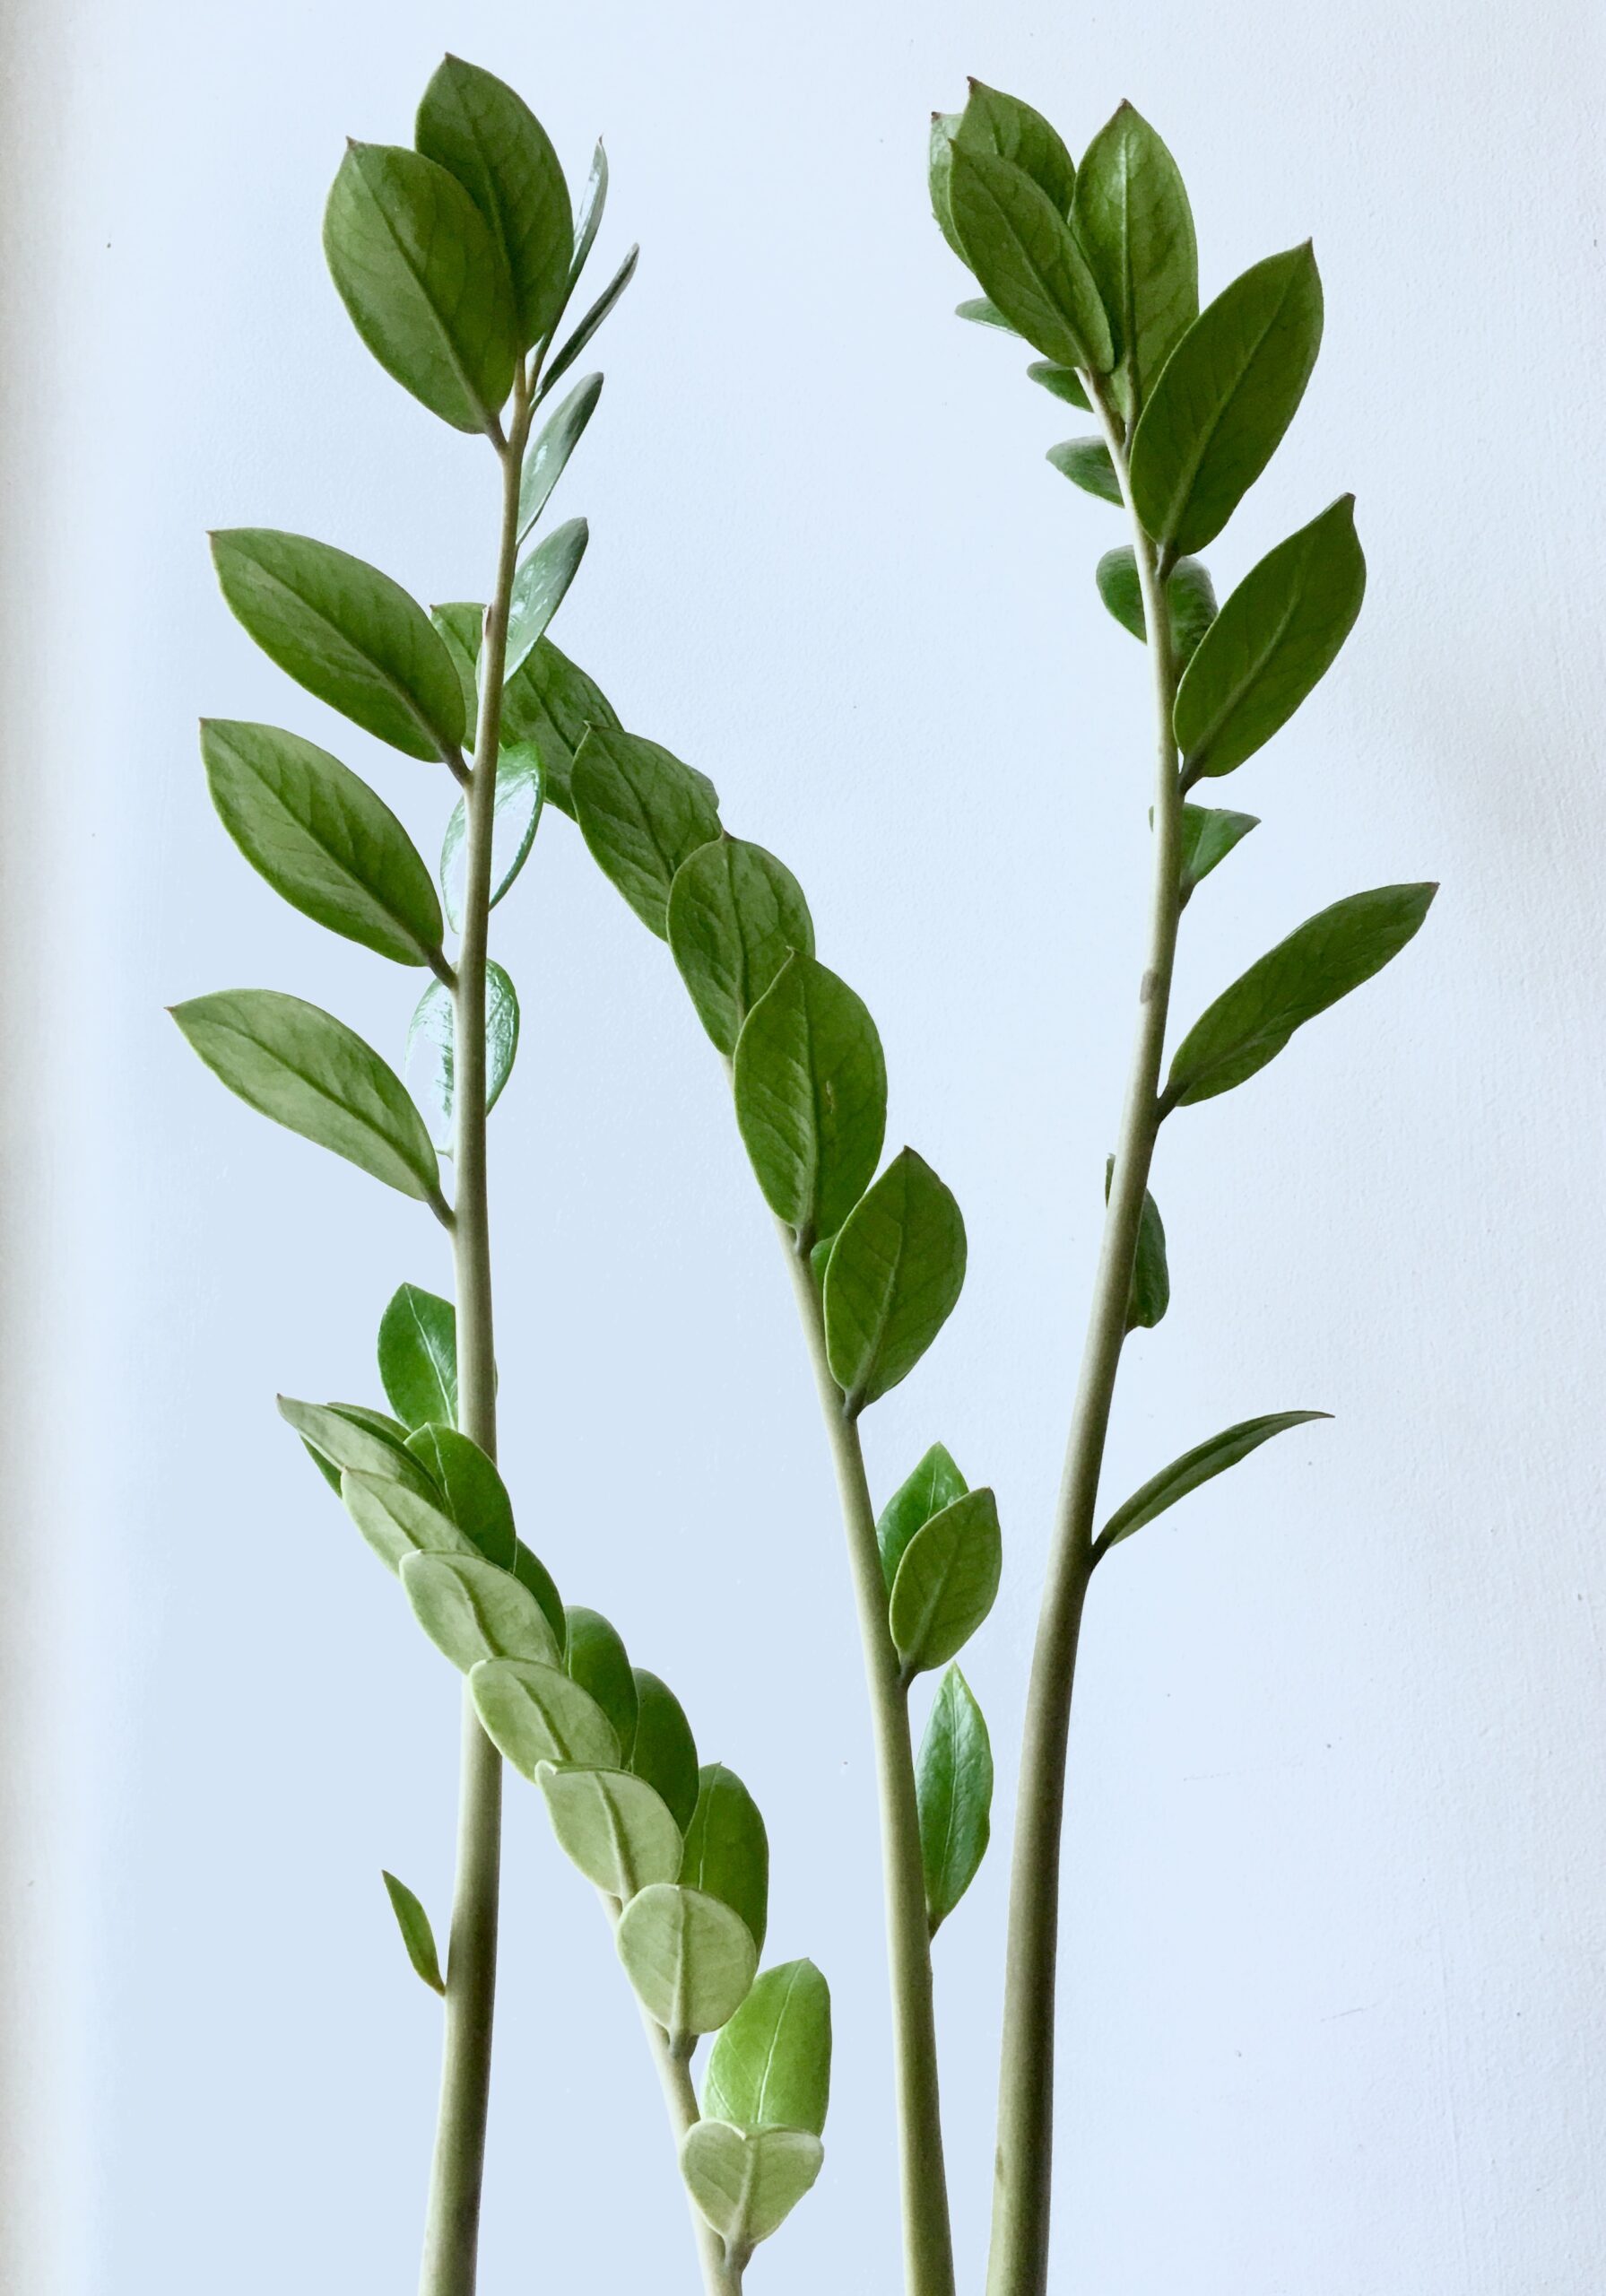 A closeup of a Zamioculcas zamiifolia plant